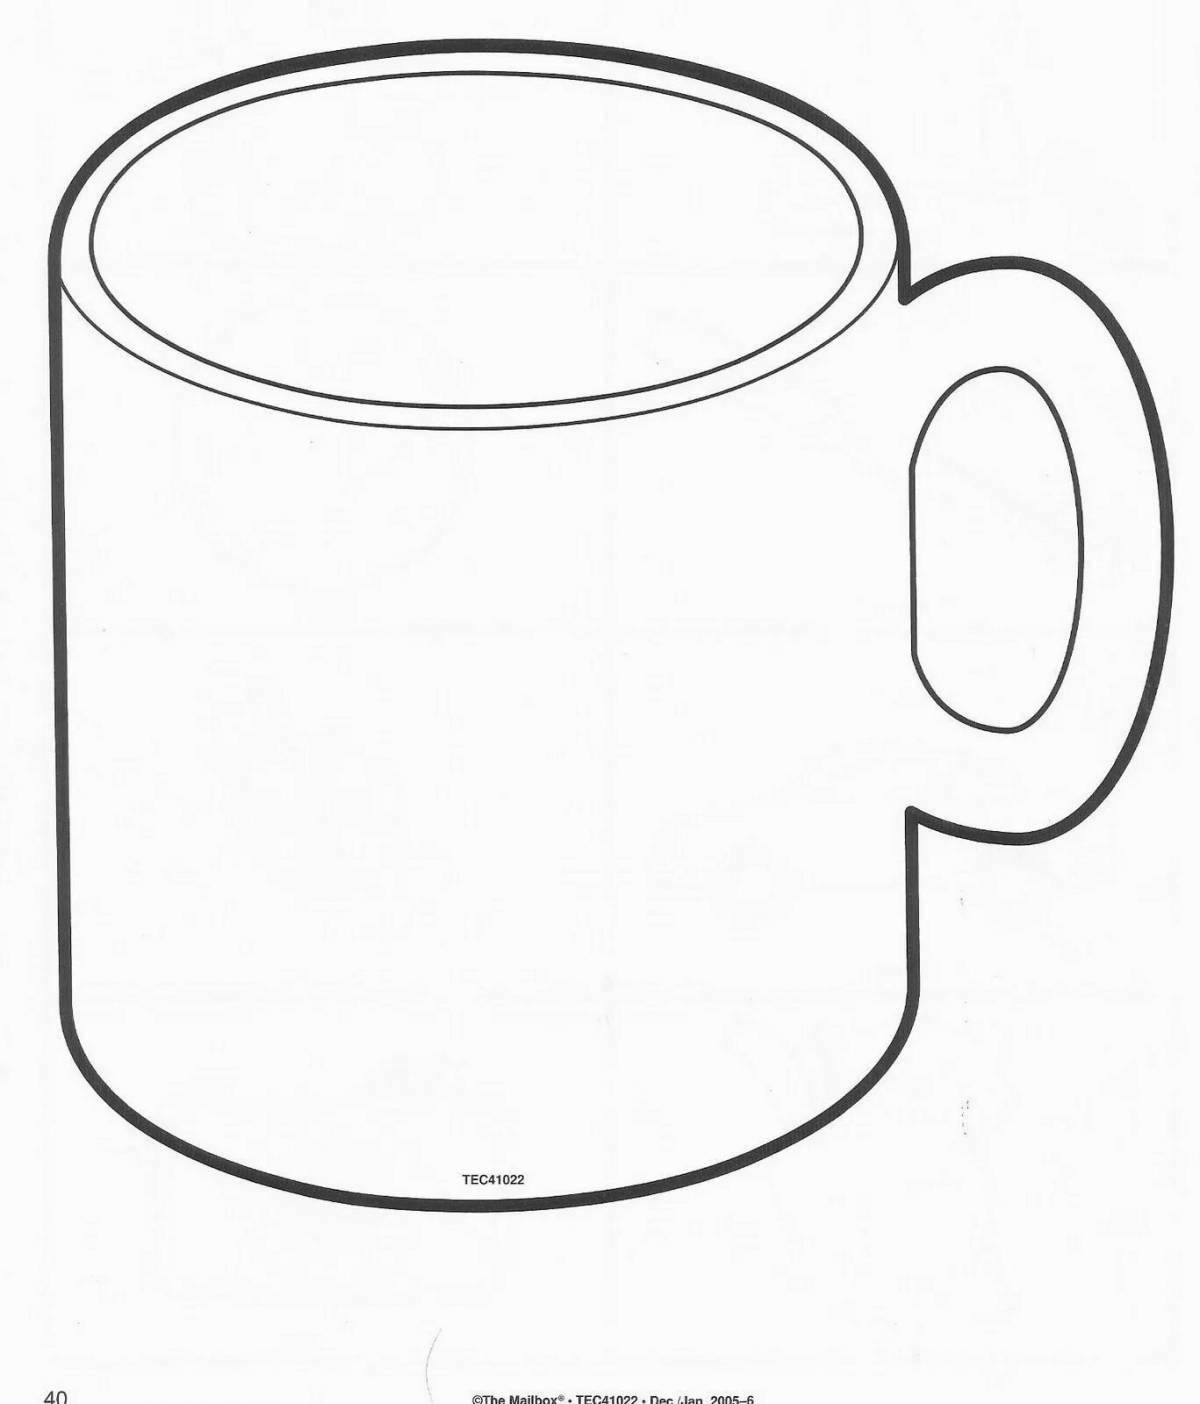 Coloring mug with polka dots lively